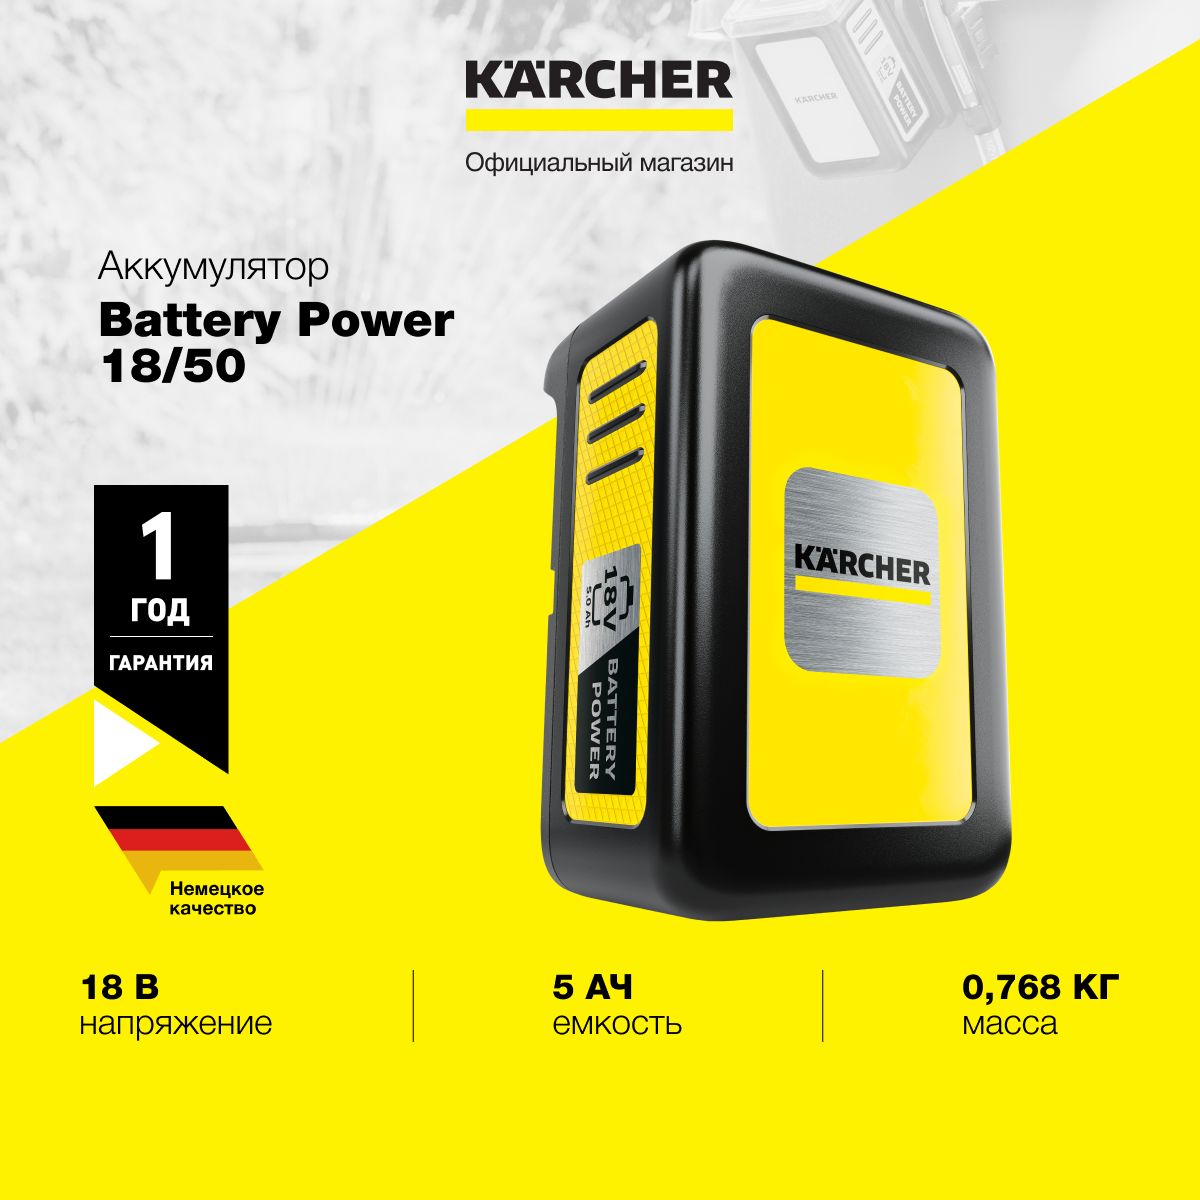 Karcher battery power